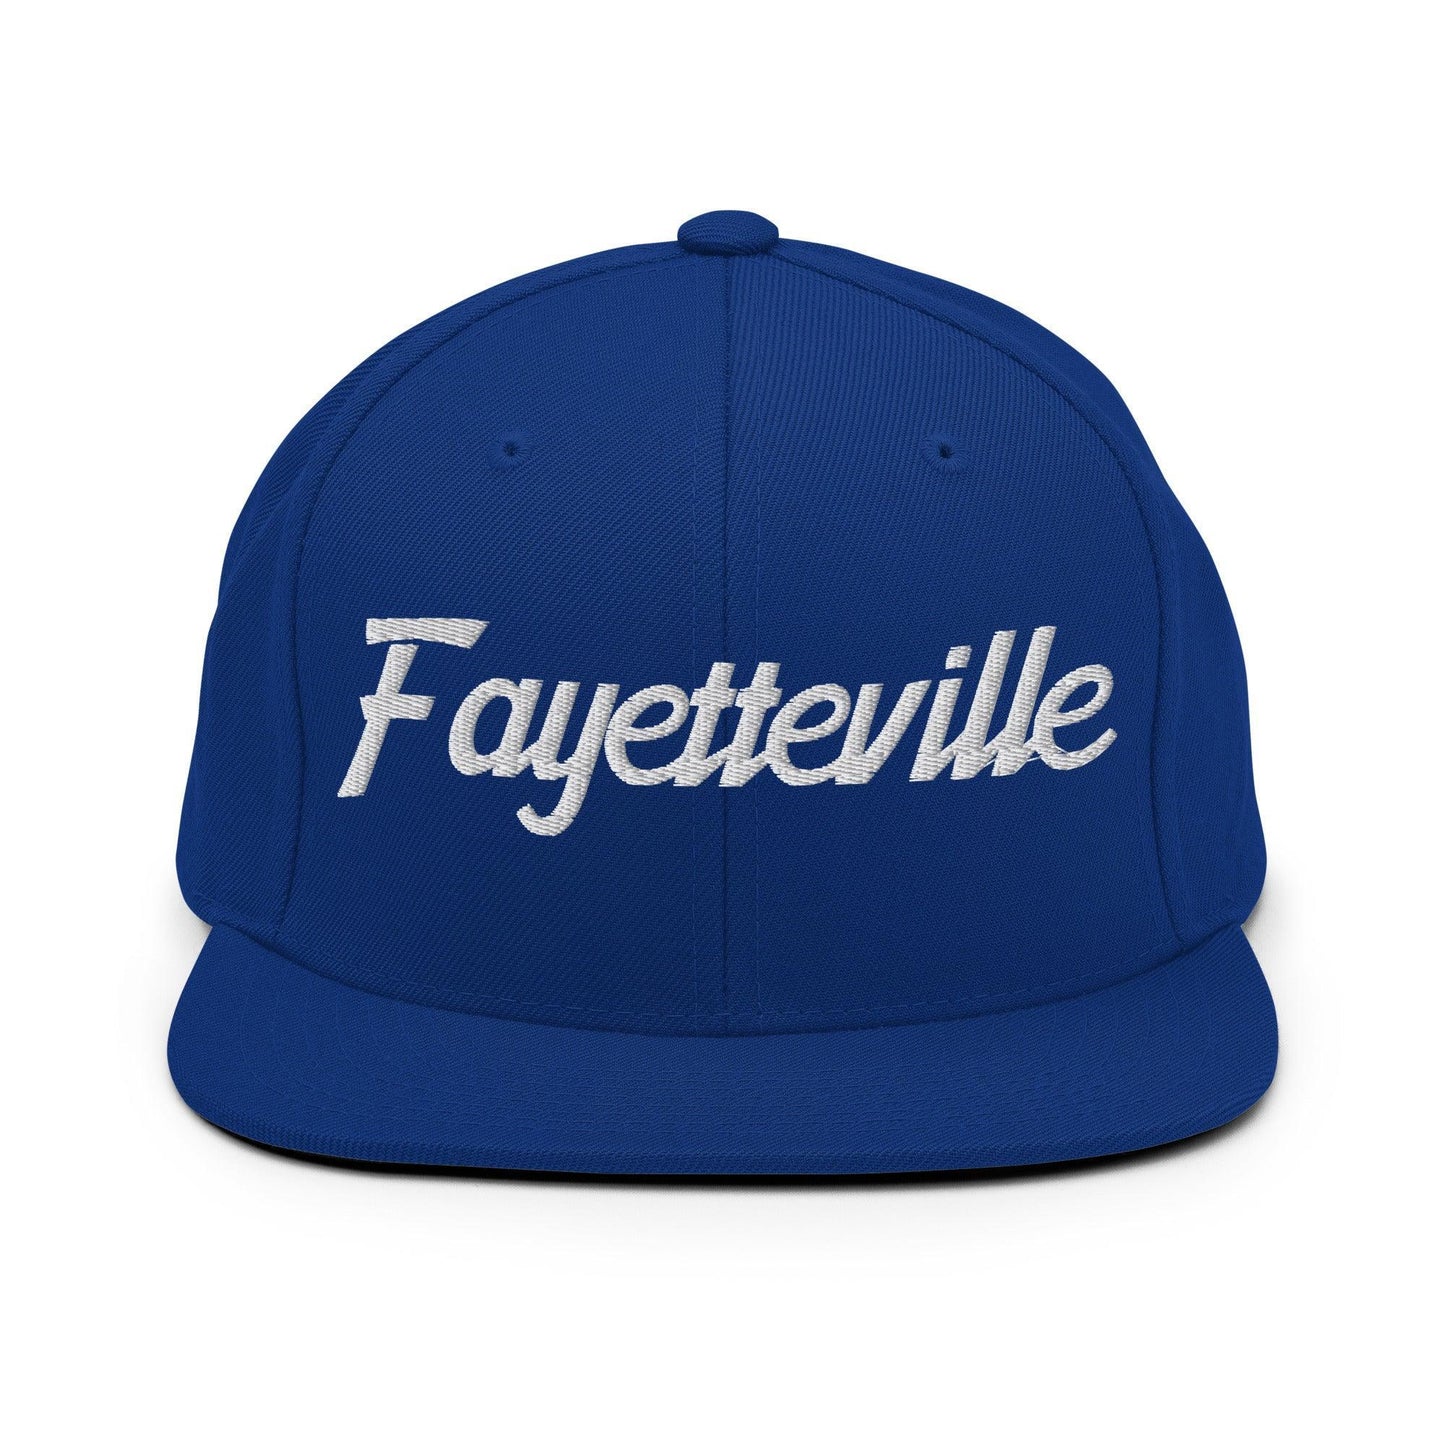 Fayetteville Script Snapback Hat Royal Blue